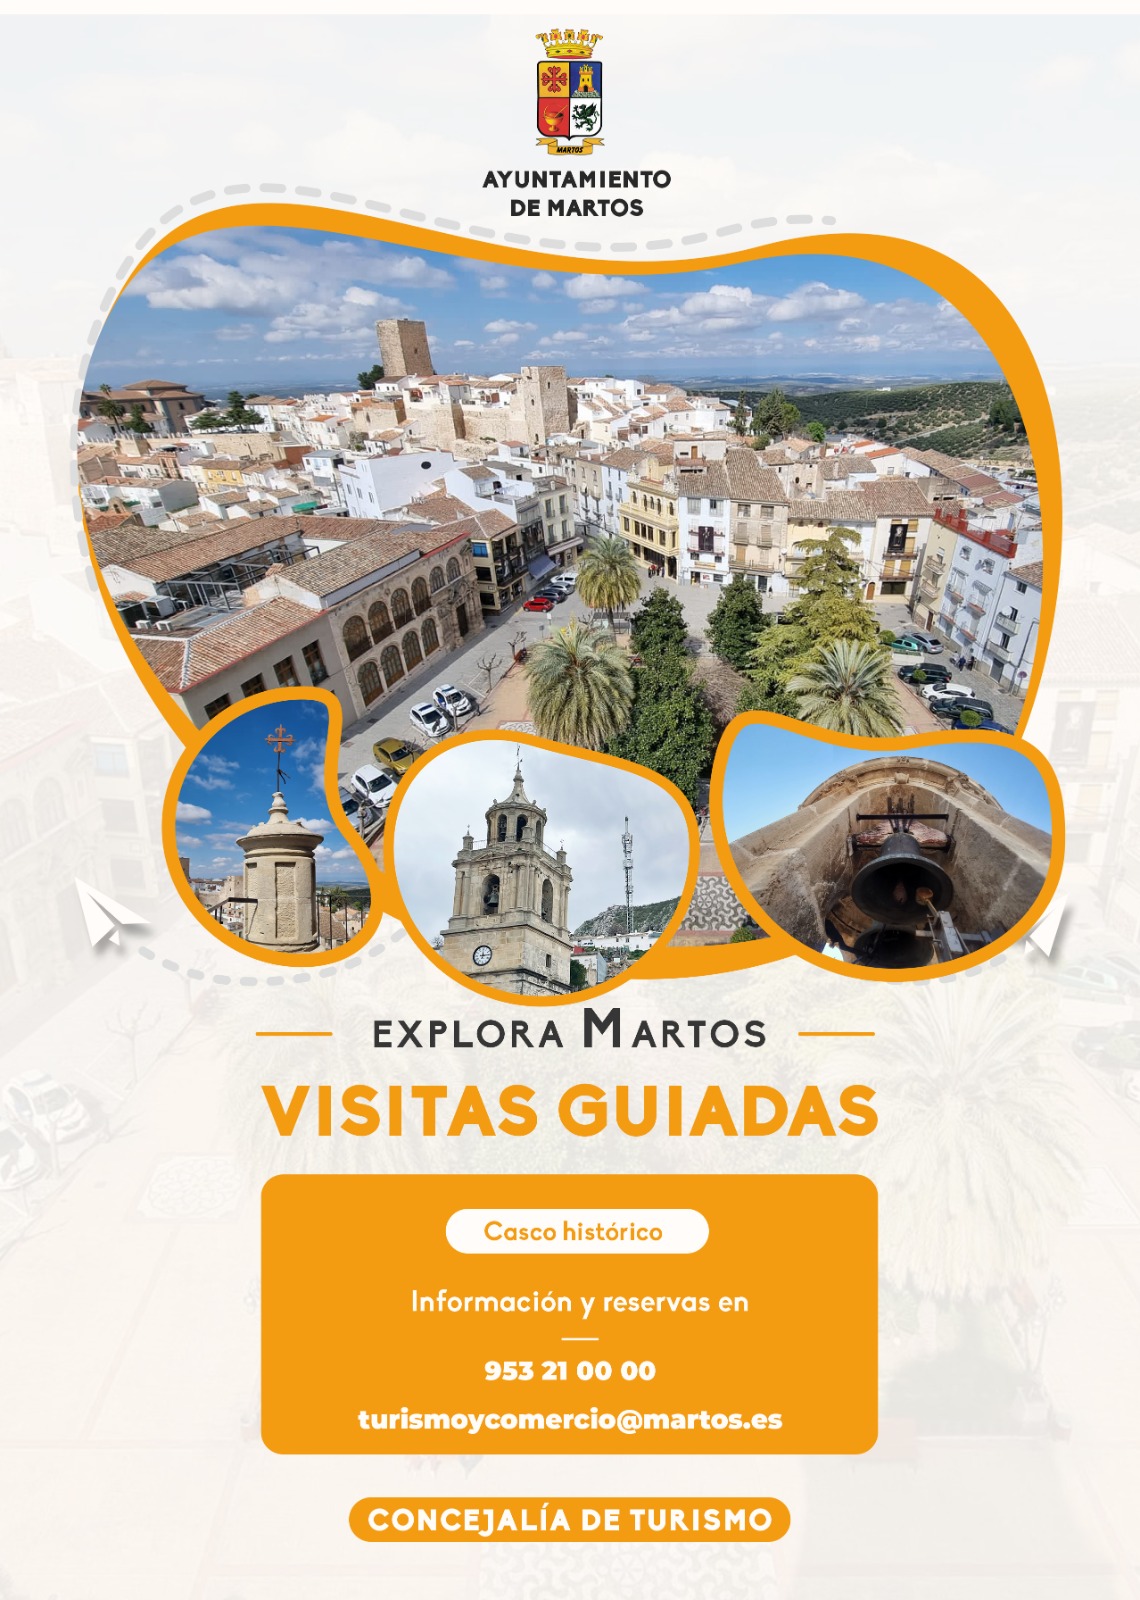 Visita Casco Histórico